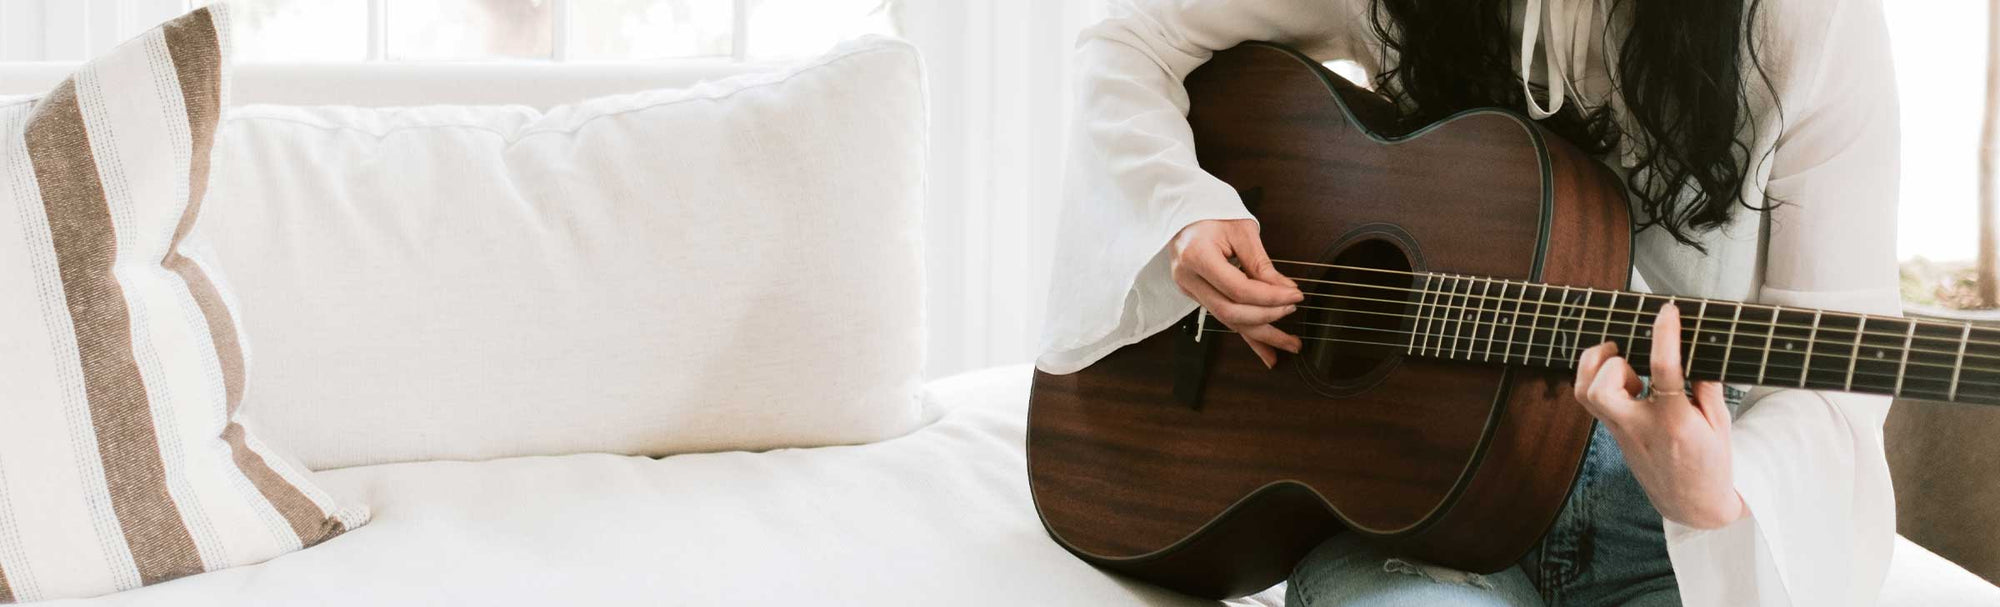 Oliver mahogany guitar on a rug